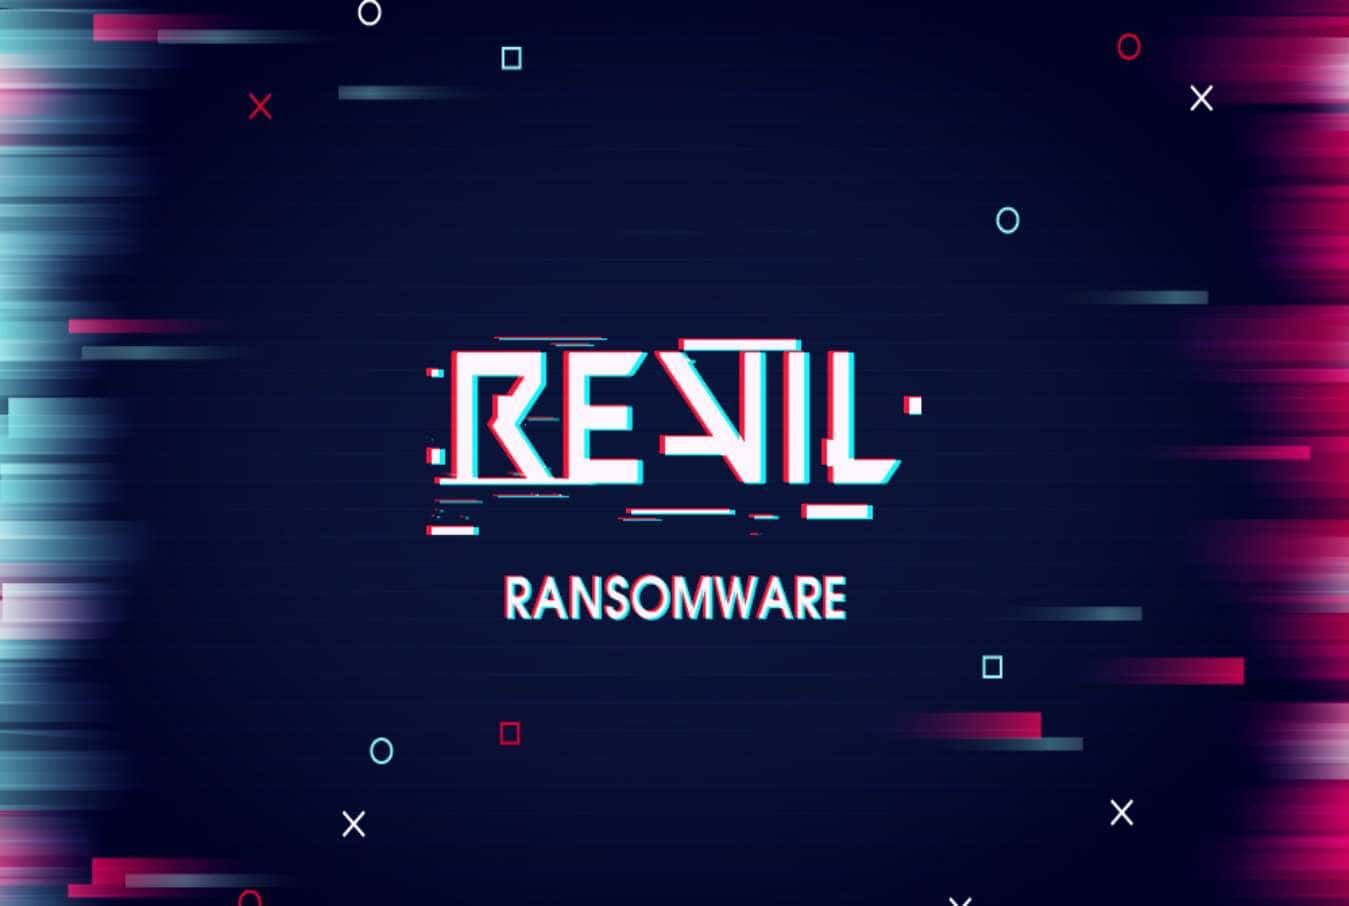 Revil ransomware increases ransom to $70M in Kaseya attack